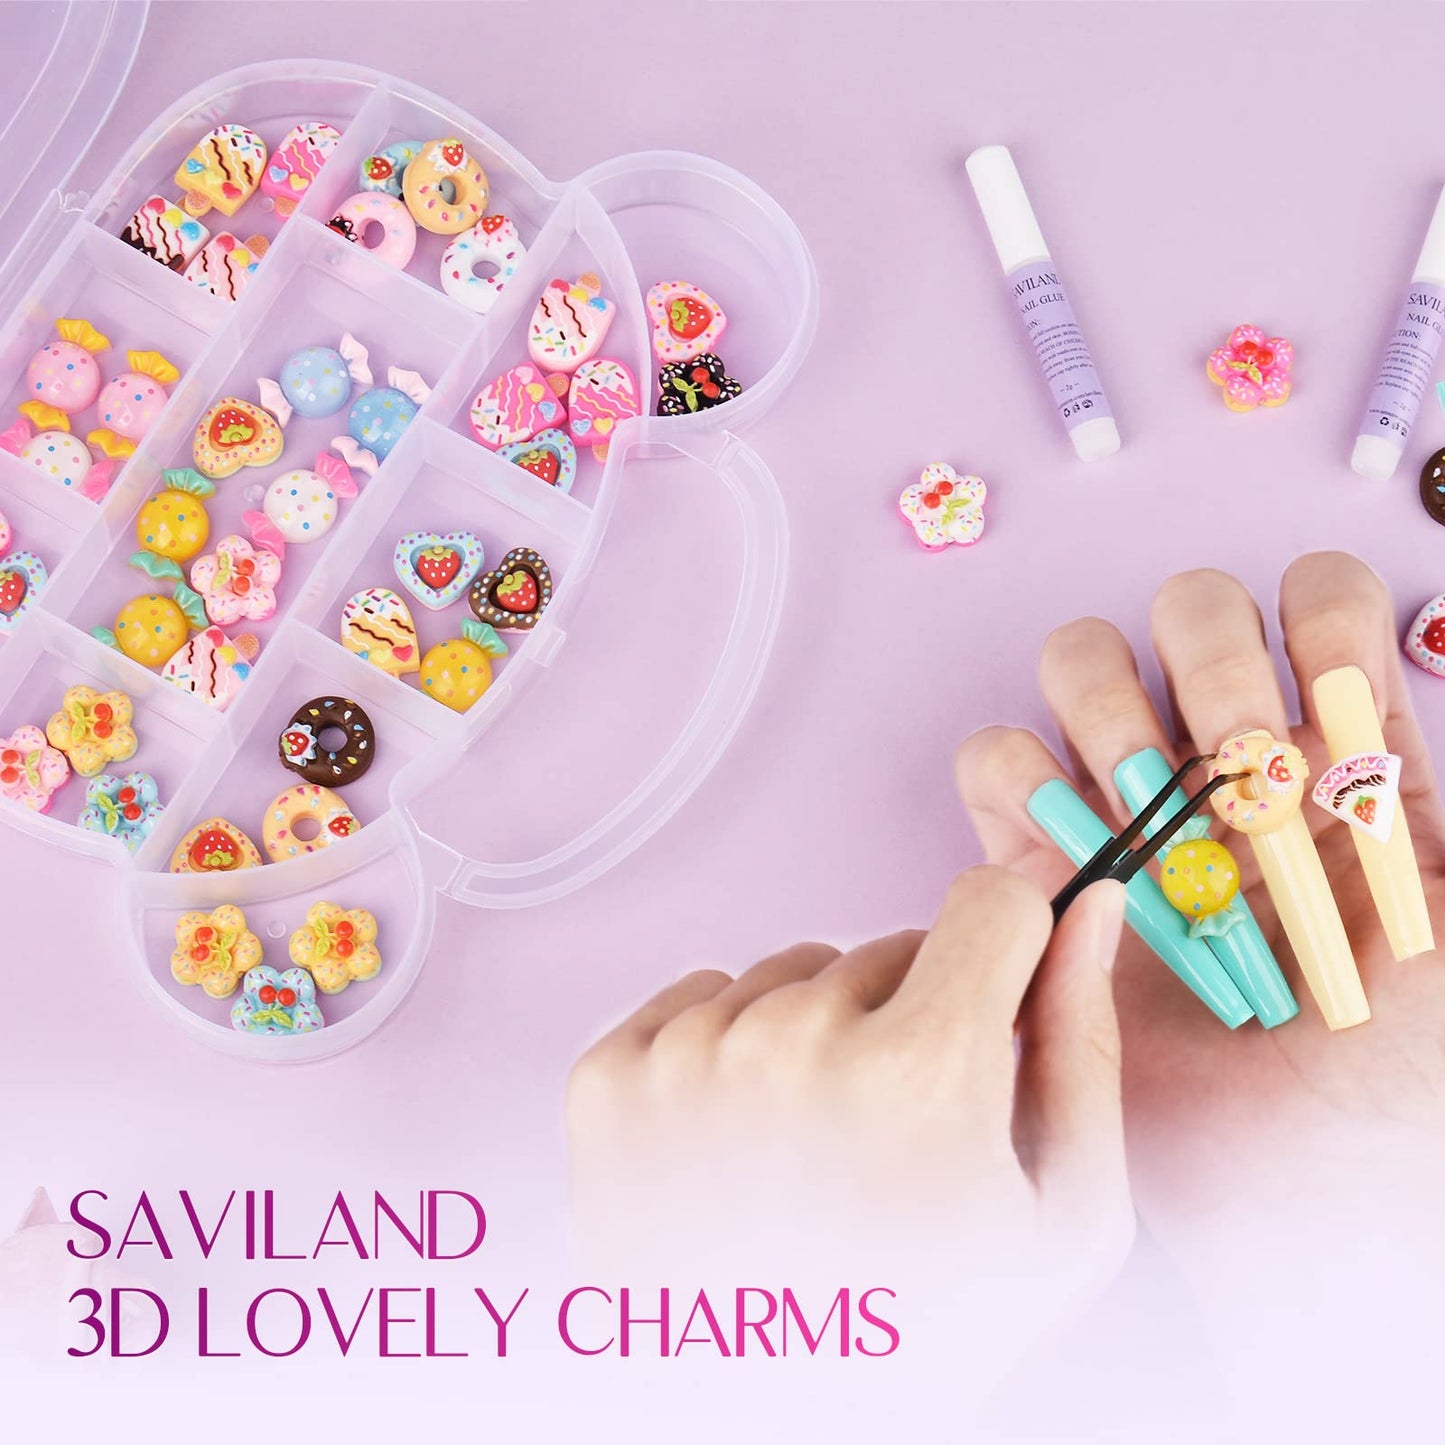 Saviland 3D Nail Charms Set - 50PCS Nail Decorations Charms Colorful Kawaii Candy Accessories Nail Art Supplies Starter Set Design Acrylic Nails for Women Girls Nail Salon Home DIY Craft